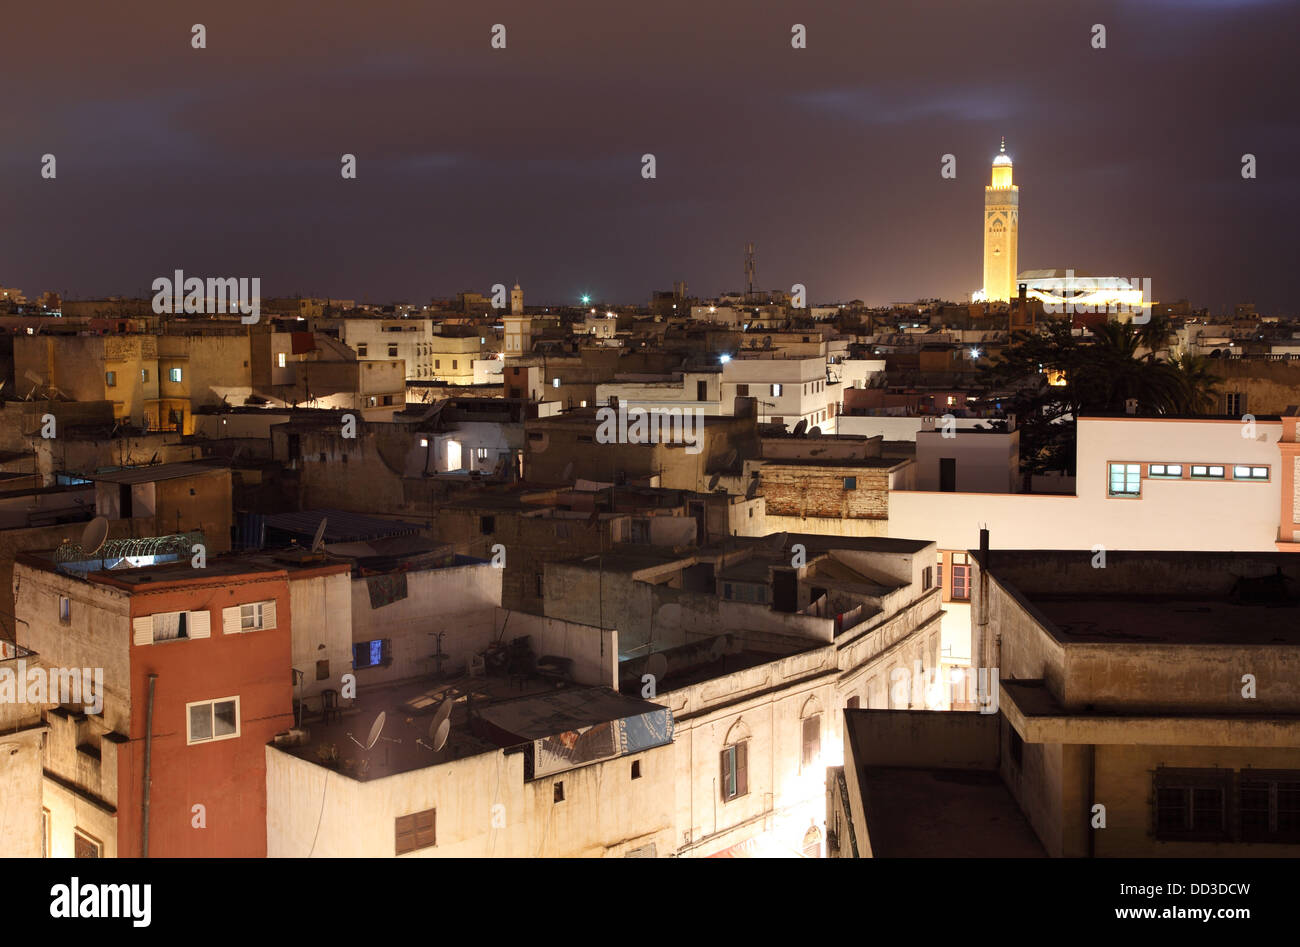 View over the medina at night. Casablanca, Morocco Stock Photo